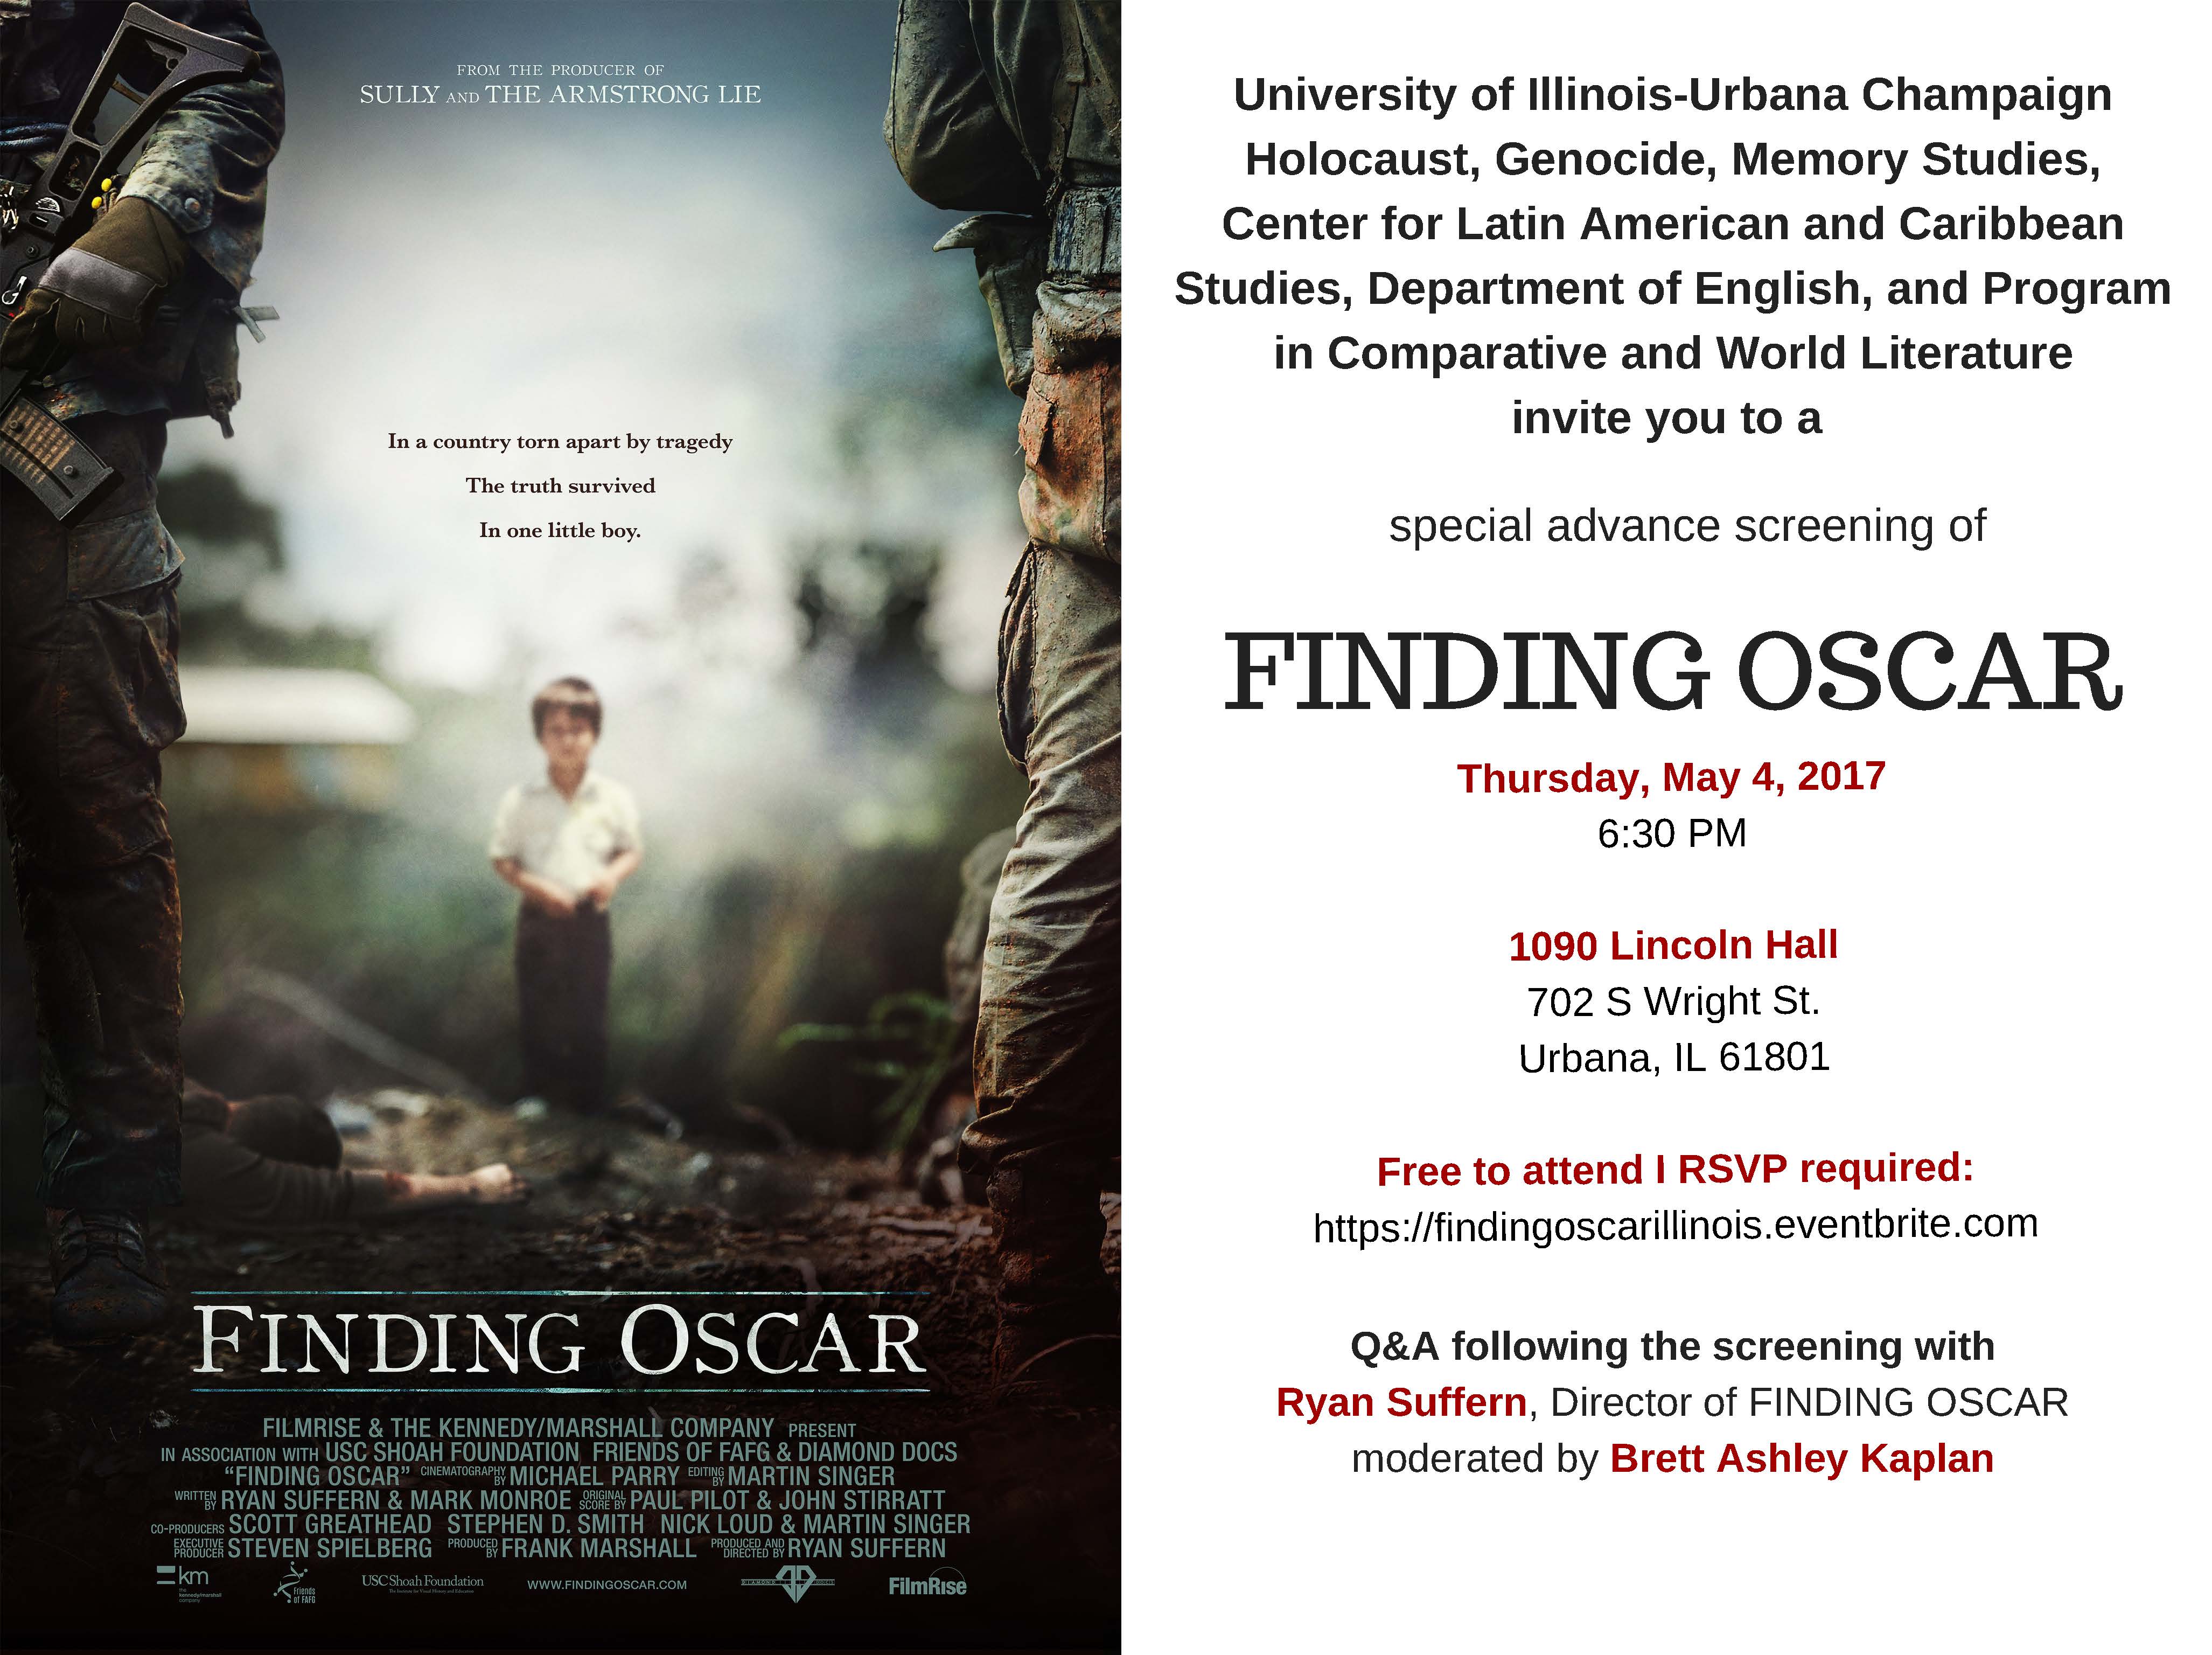 Finding Oscar